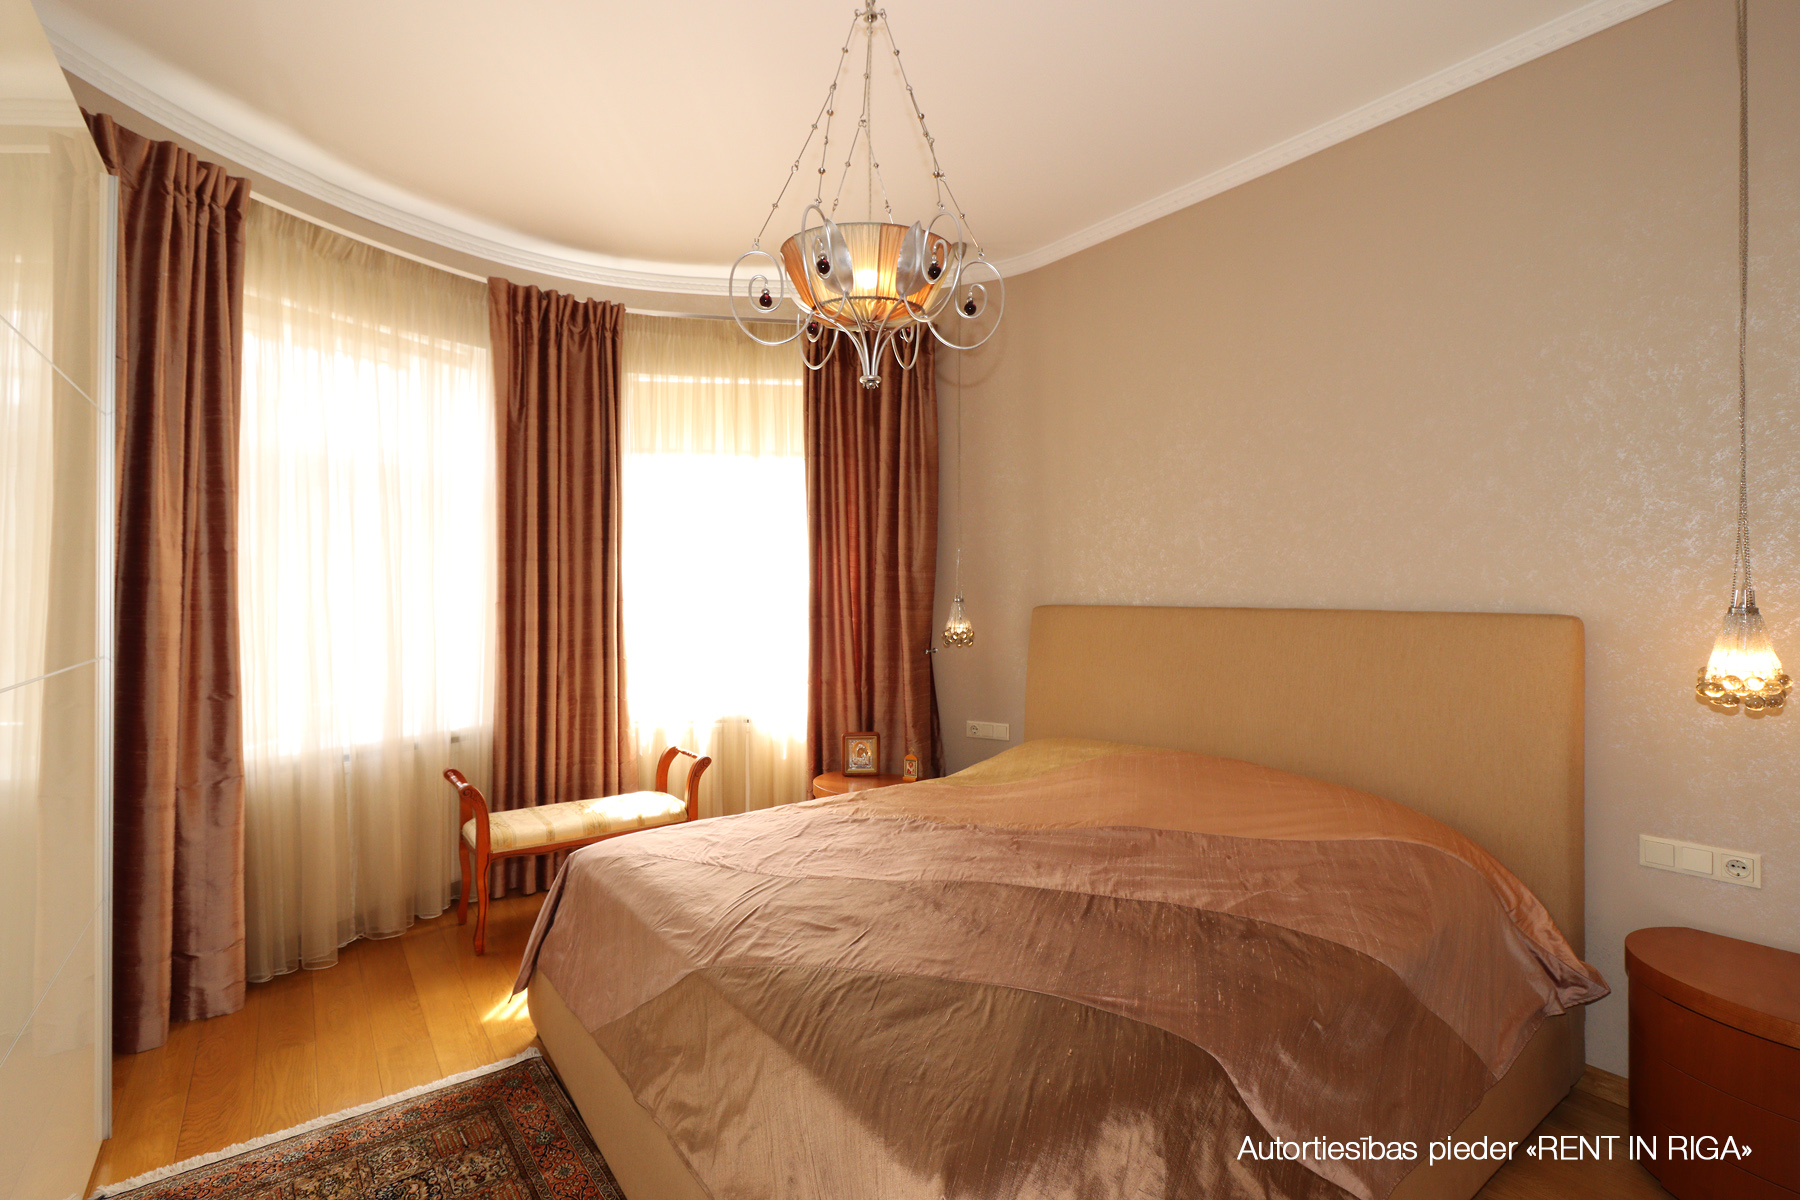 Apartment for sale, Pulkvieža Brieža street 7 - Image 1